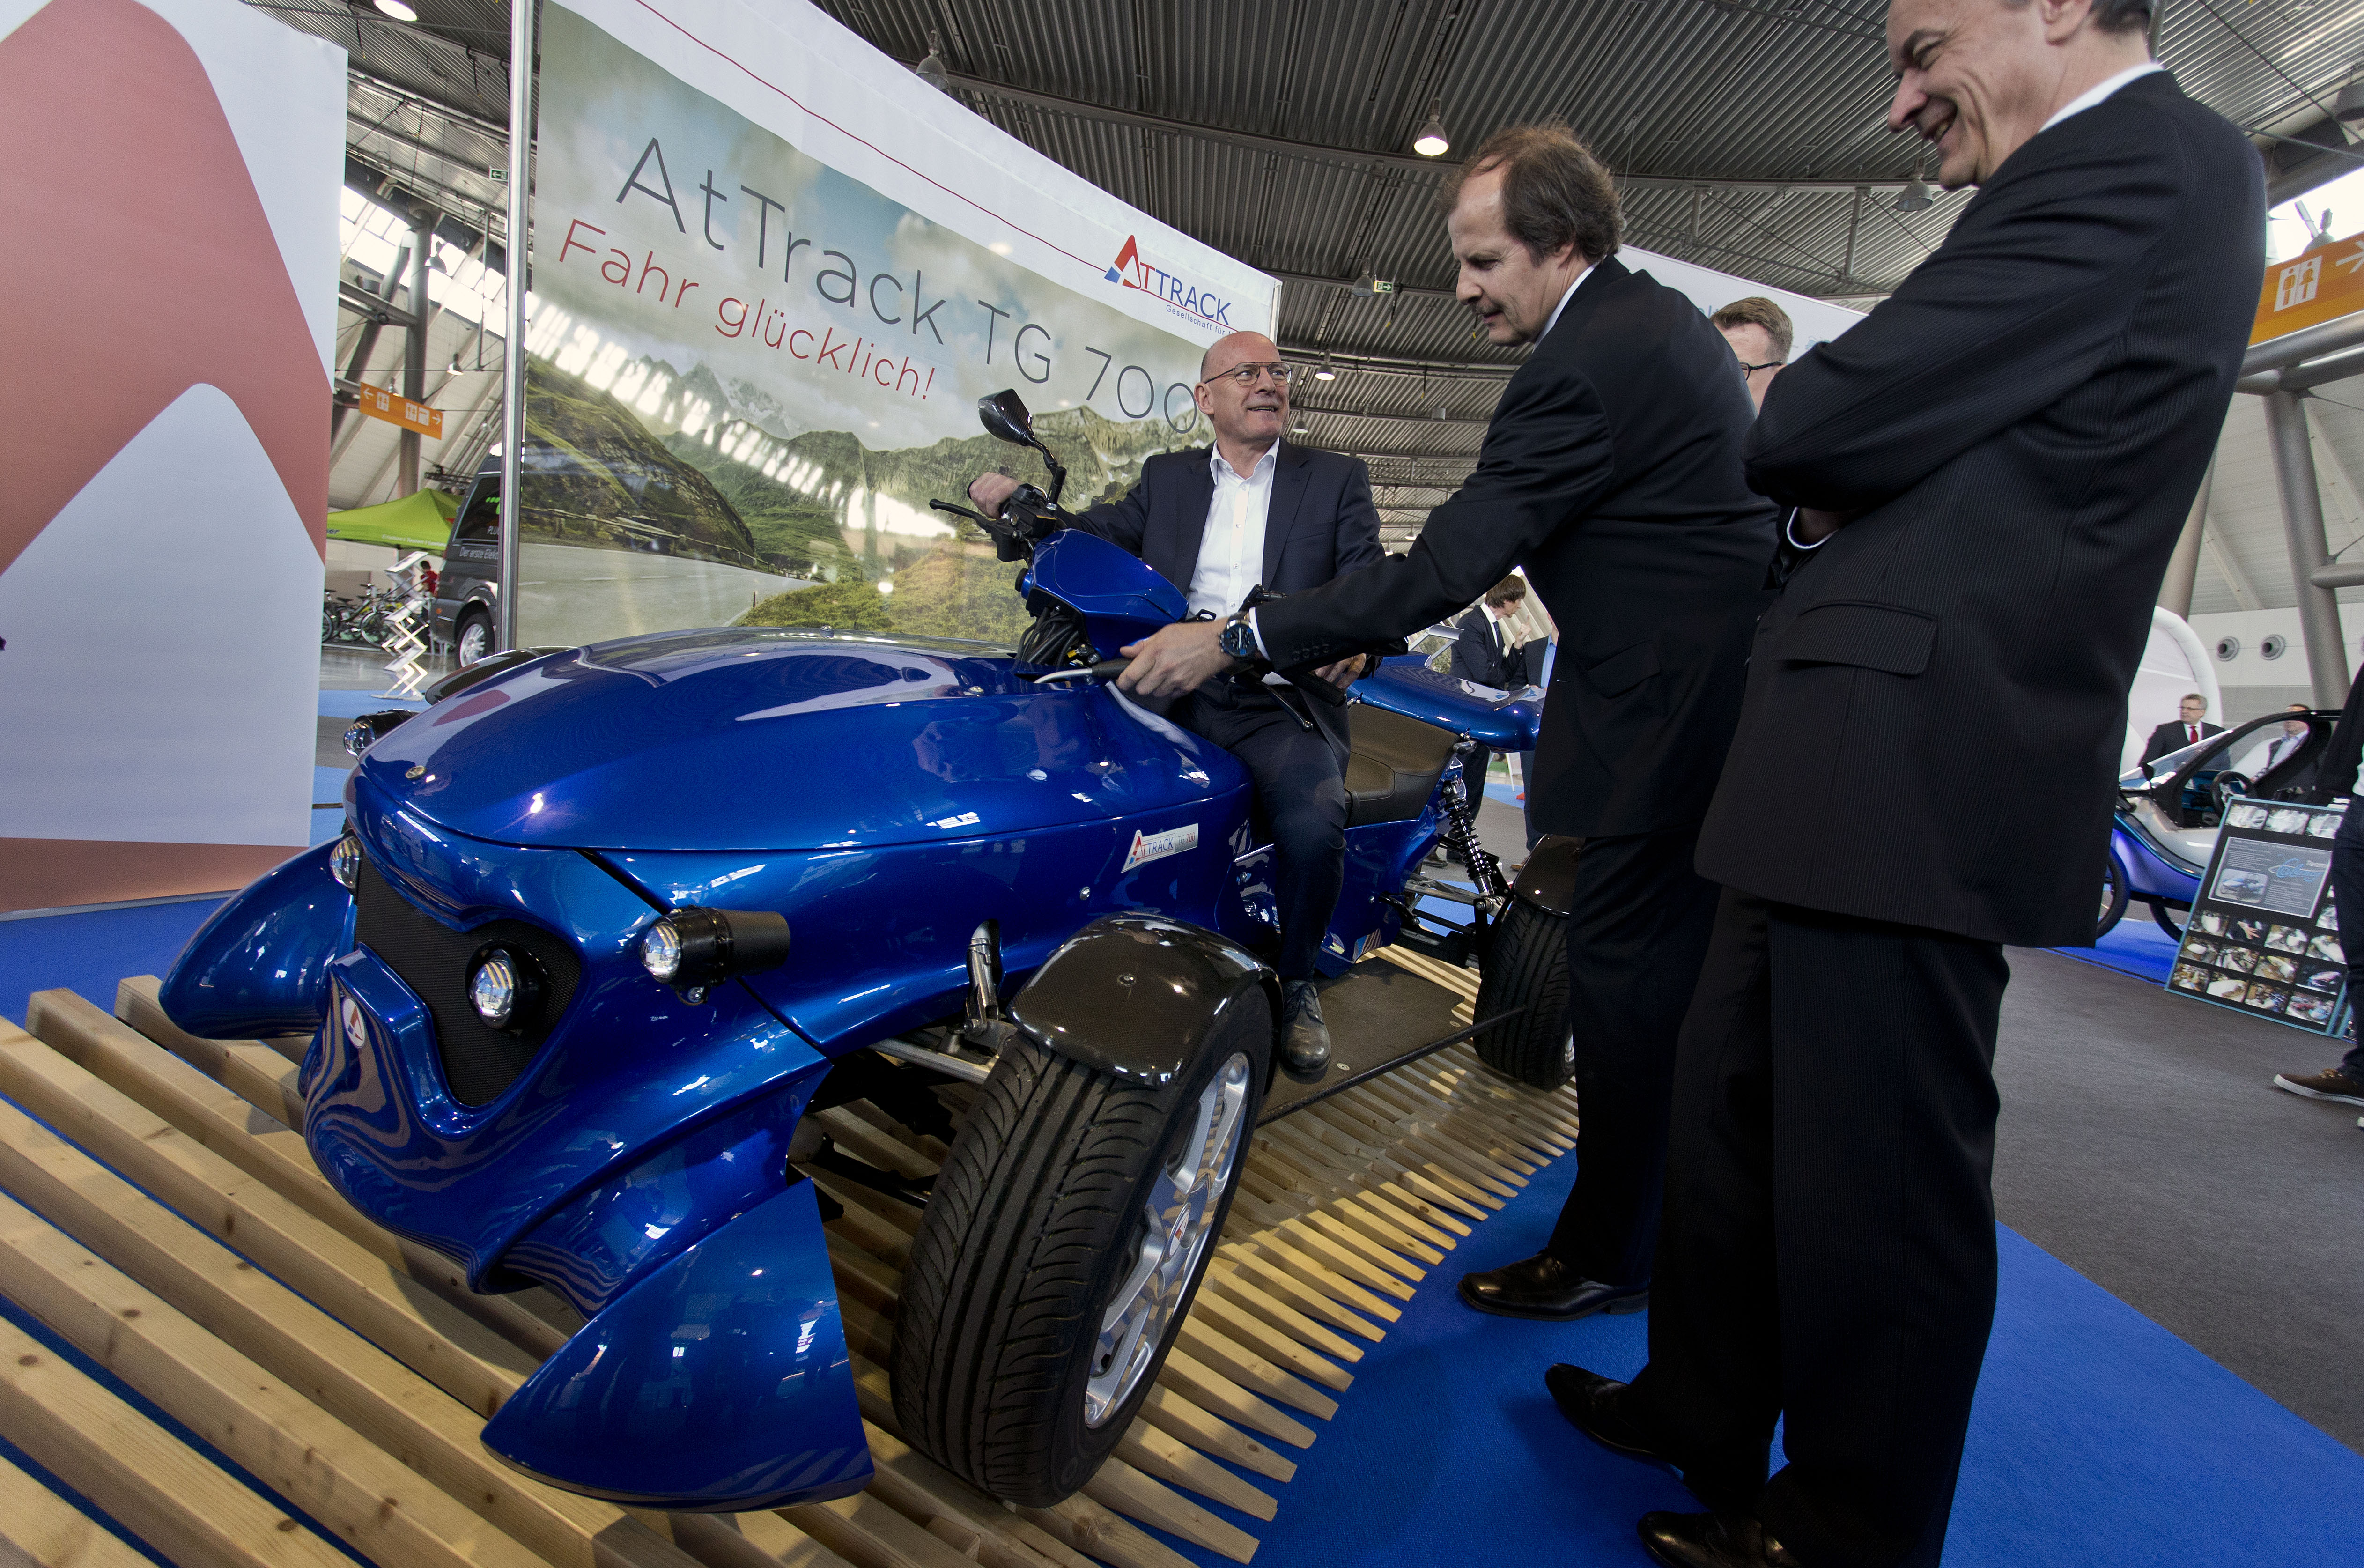 TG 700 auf der i-Mobility 2015, Bild: auto motor sport i Mobility 2015